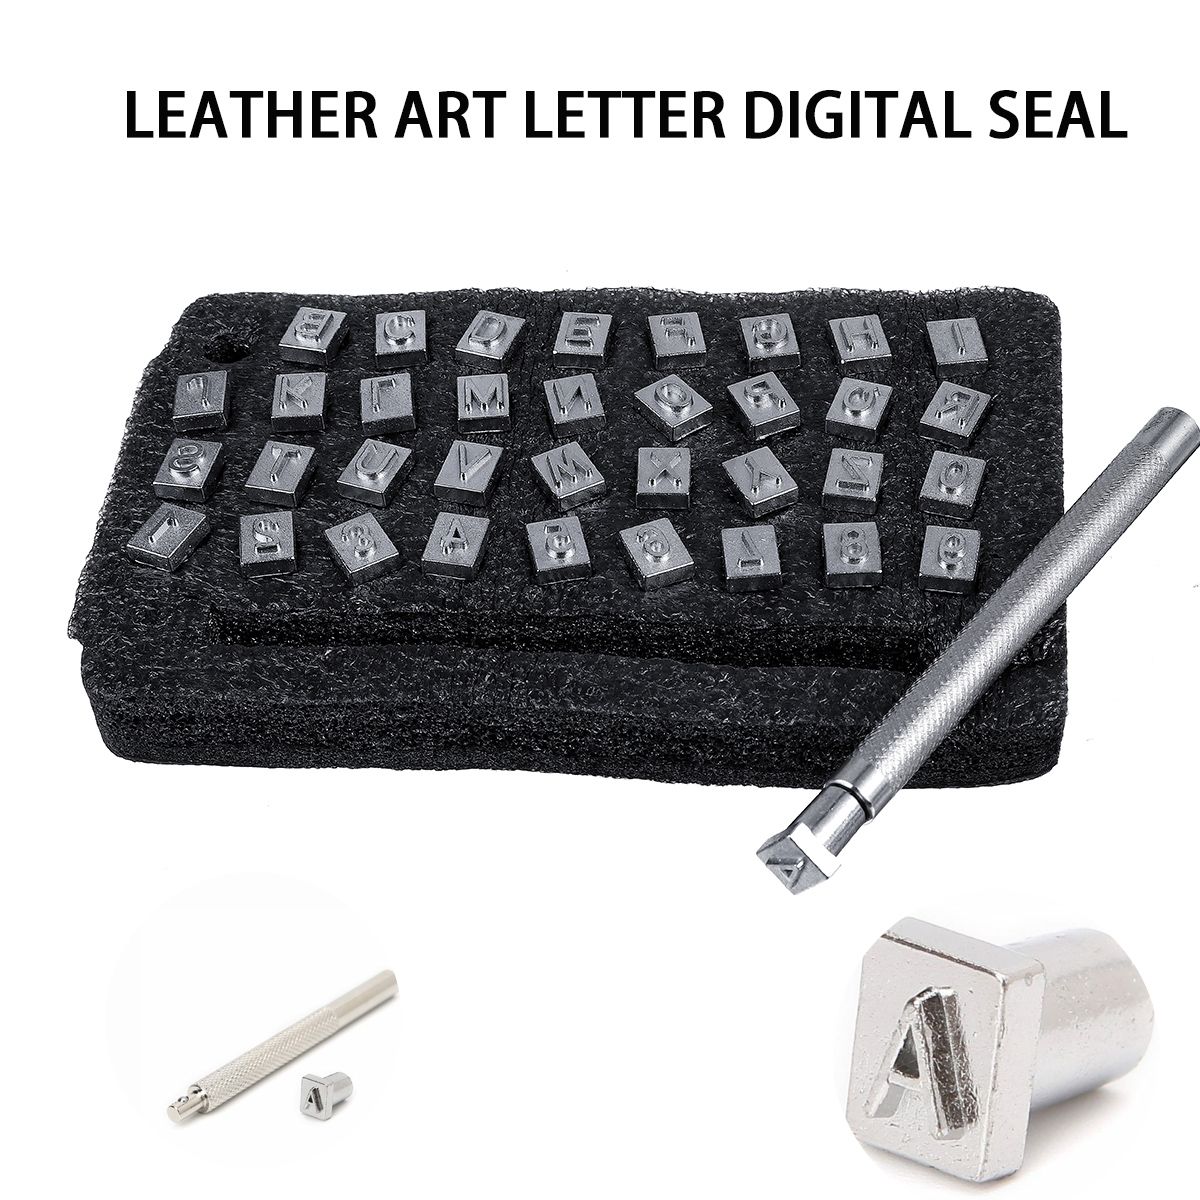 DIY-Leather-Seal-Engraving-Craft-Tool-Steel-Alphabet-Number-Stamp-Leather-Craft-Stamps-Metal-Printin-1720939